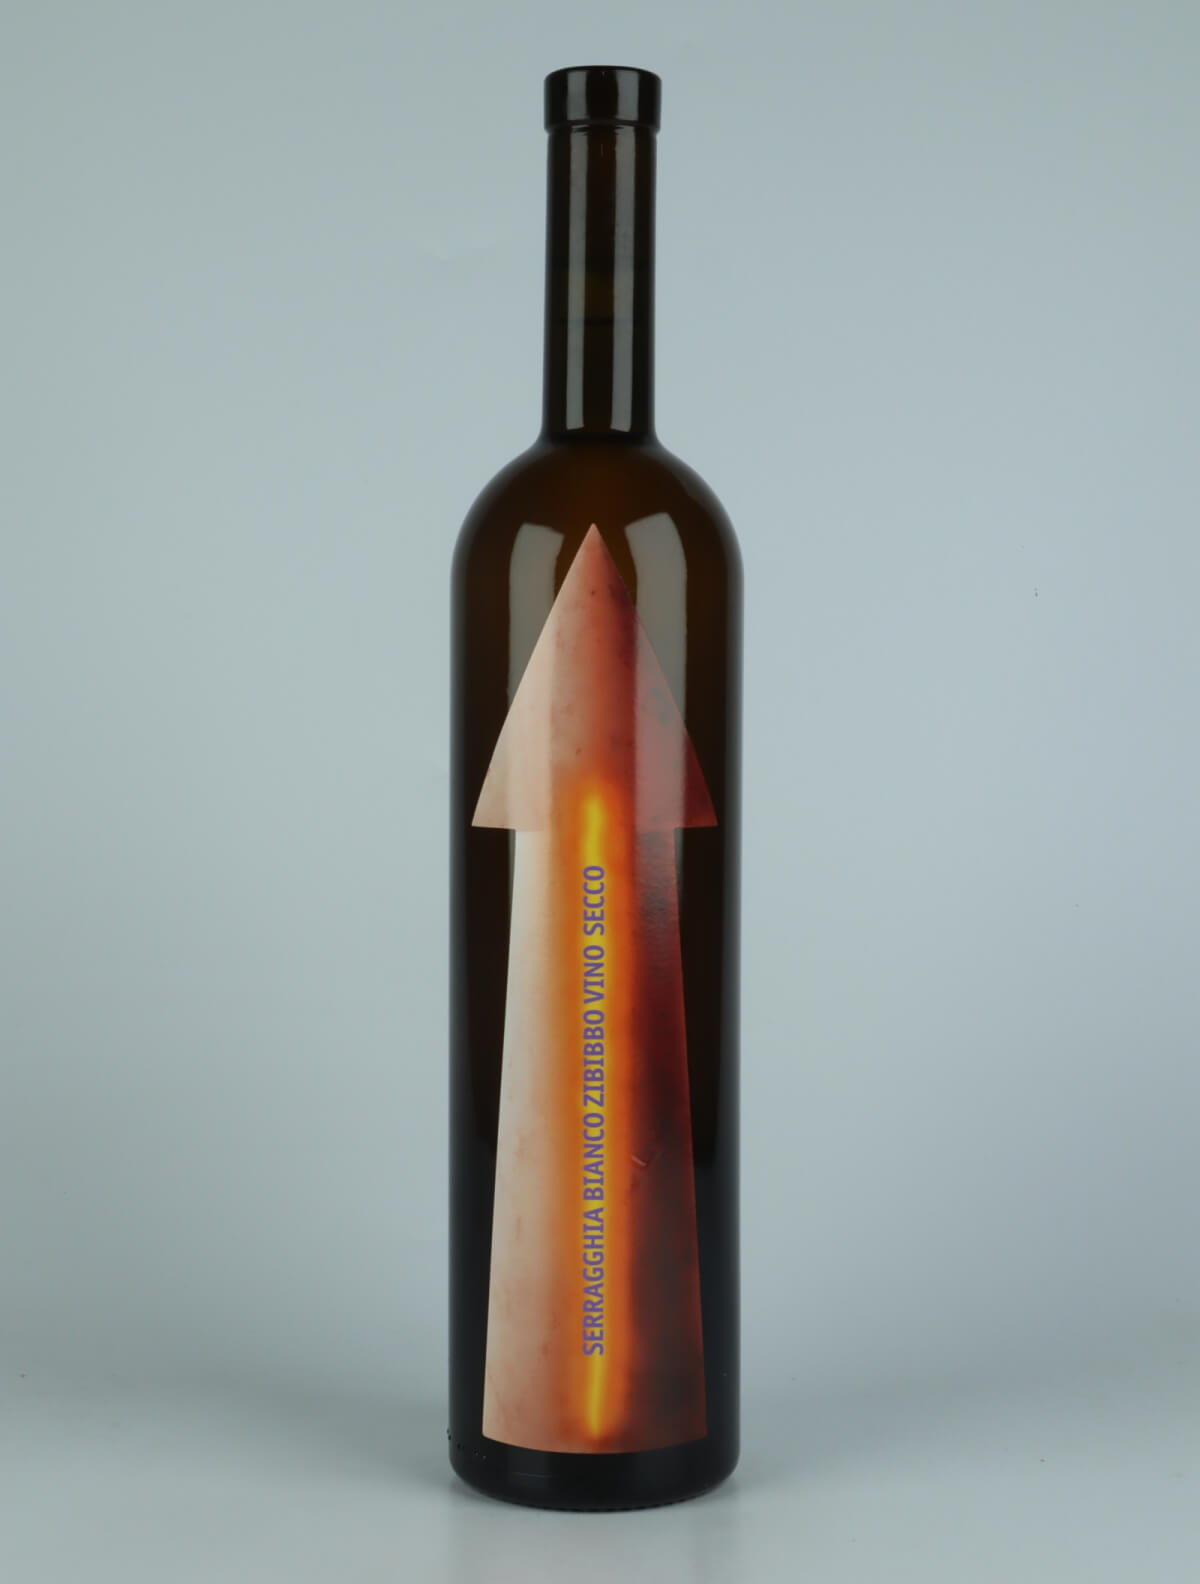 A bottle 2022 Serragghia Bianco Orange wine from Gabrio Bini, Sicily in Italy